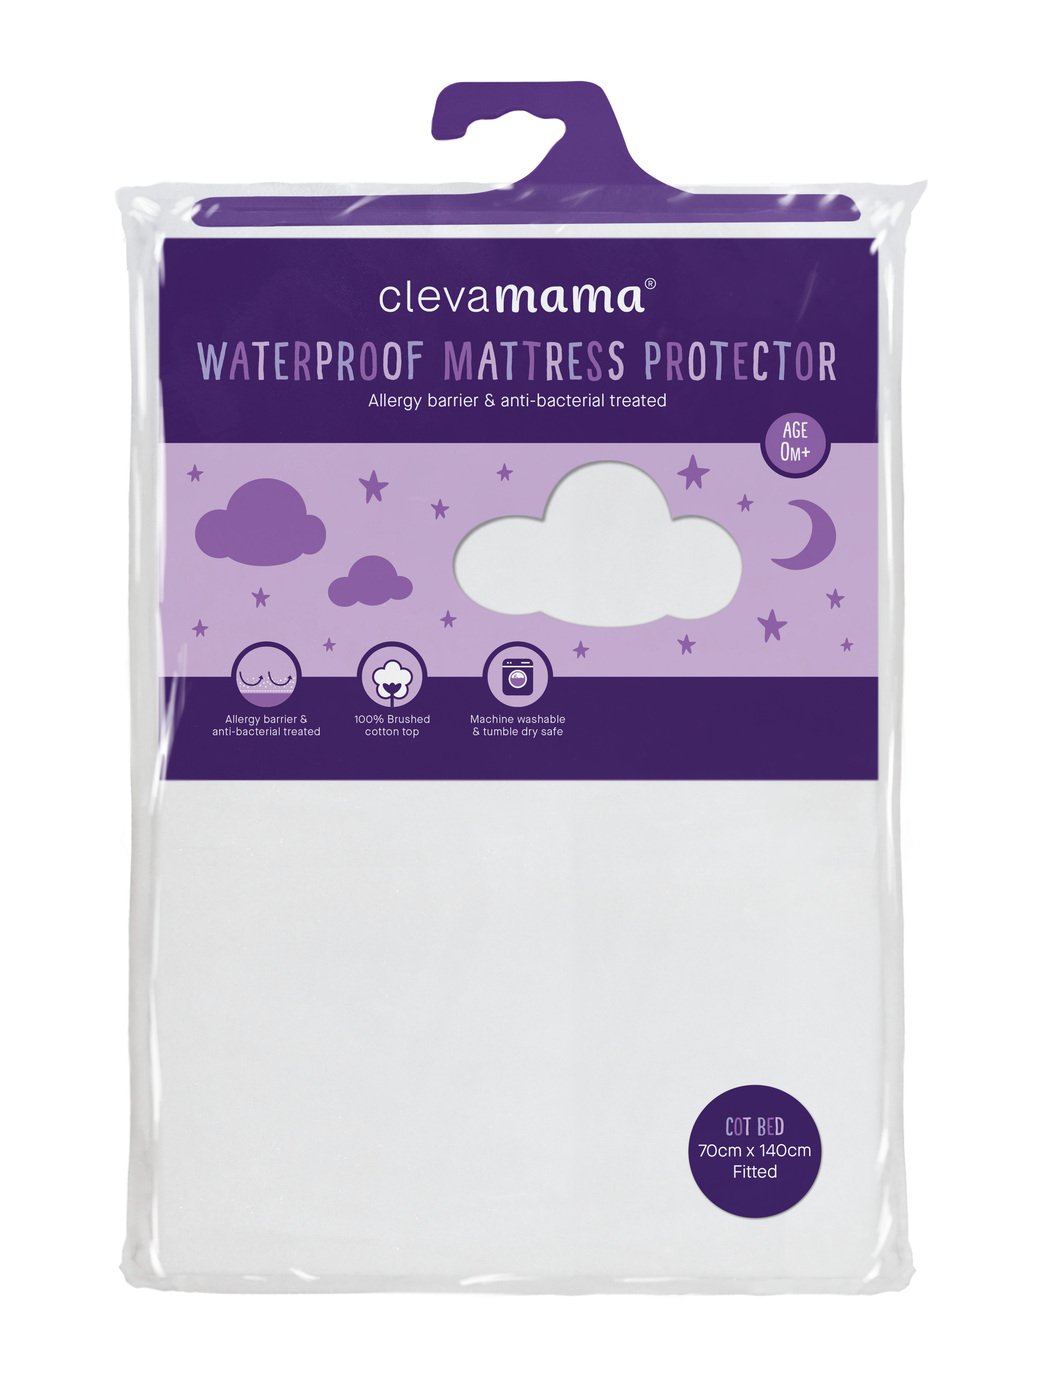 Clevamama Waterproof Mattress Protector Cot Bed 140x70 cm